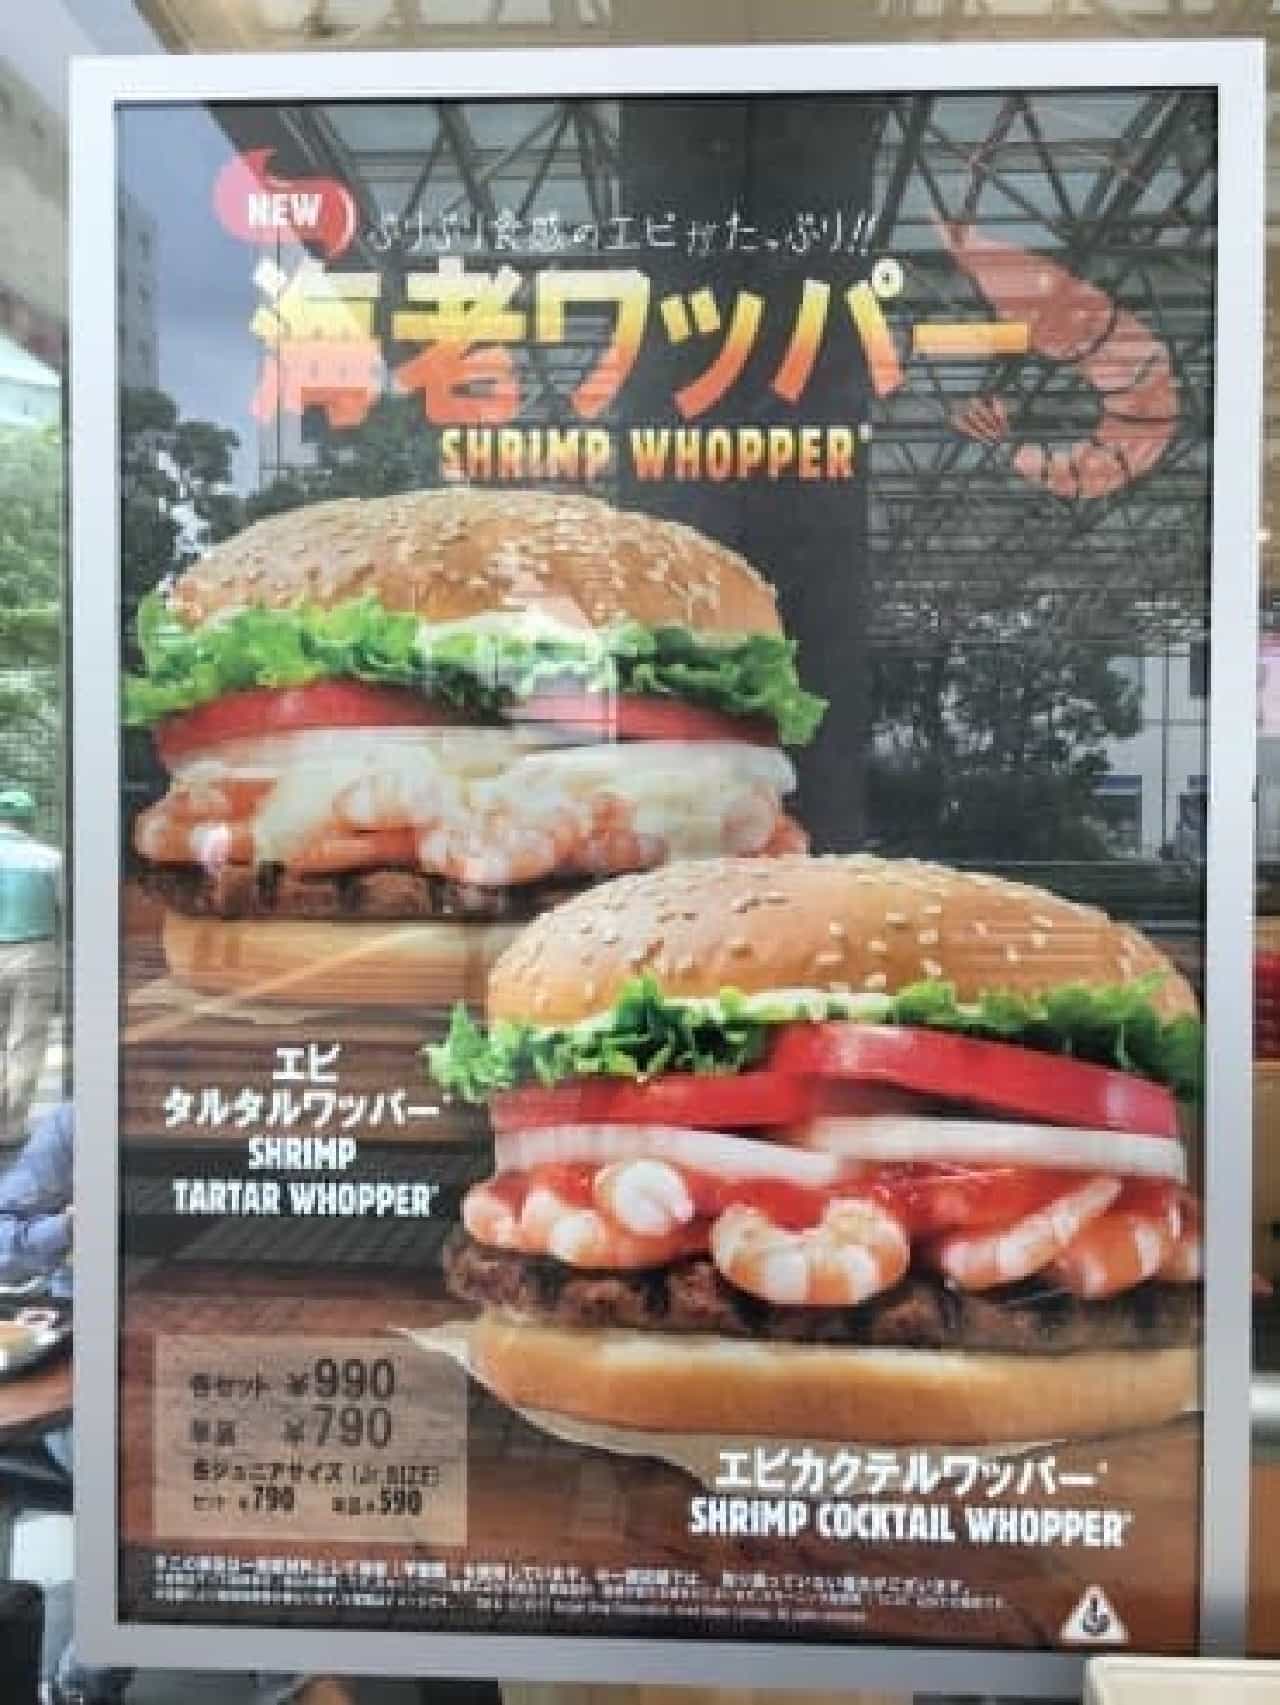 Burger King "Shrimp Wapper"